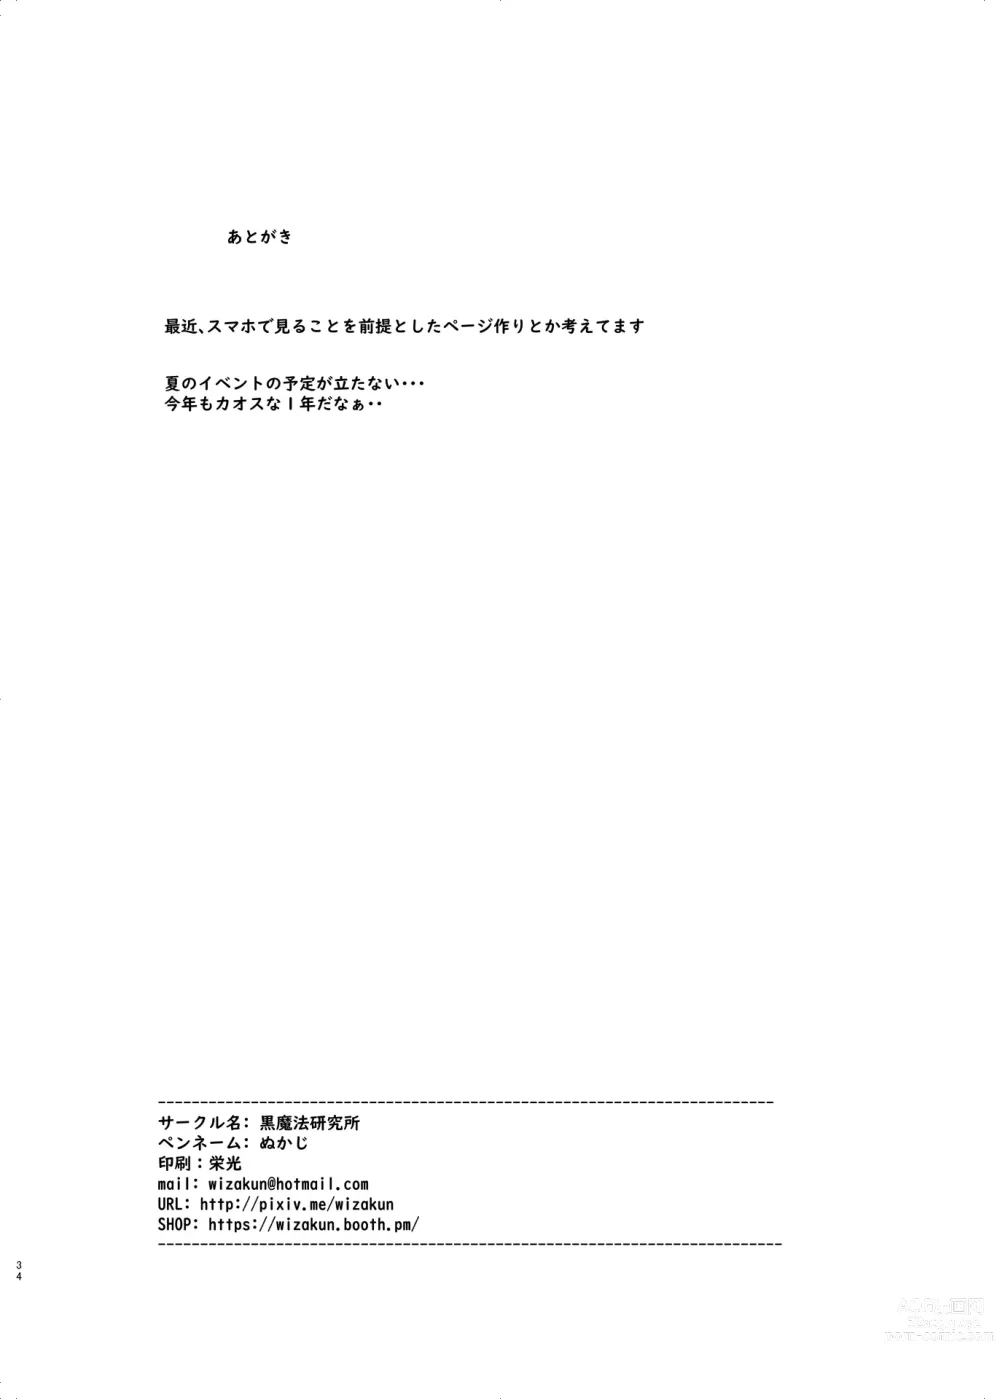 Page 34 of doujinshi Ari Channel 20210620 Shiensha Gentei Plan Nama Ecchi Haishin